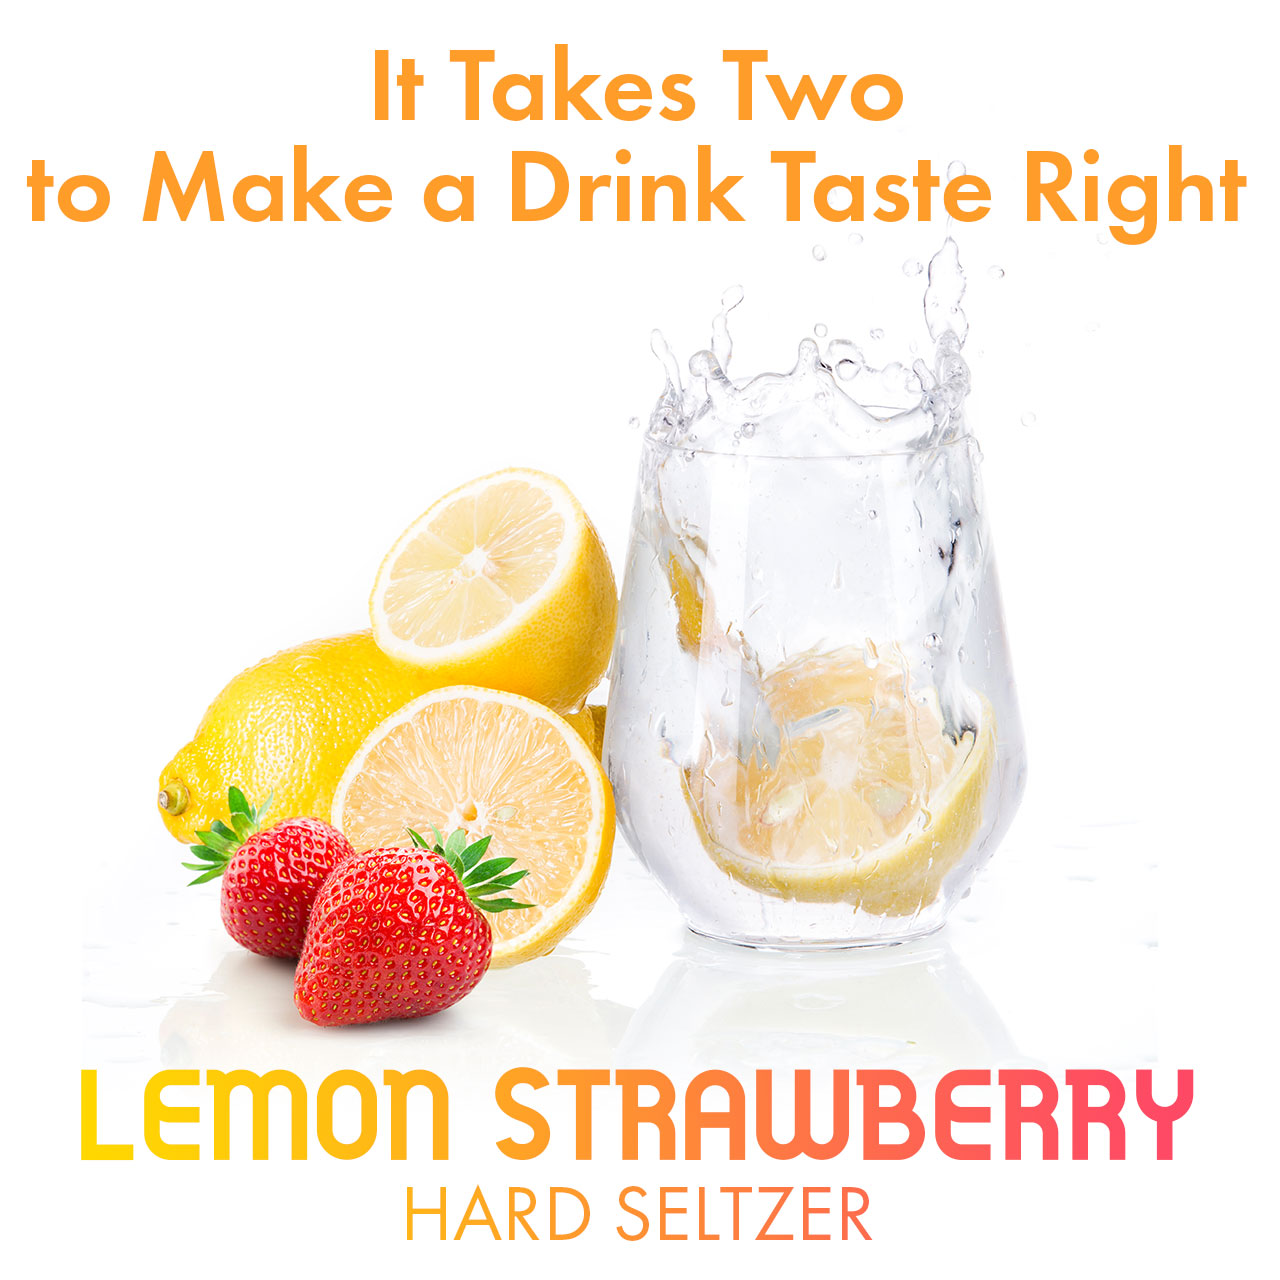 Introducing Lemon Strawberry Hard Seltzer